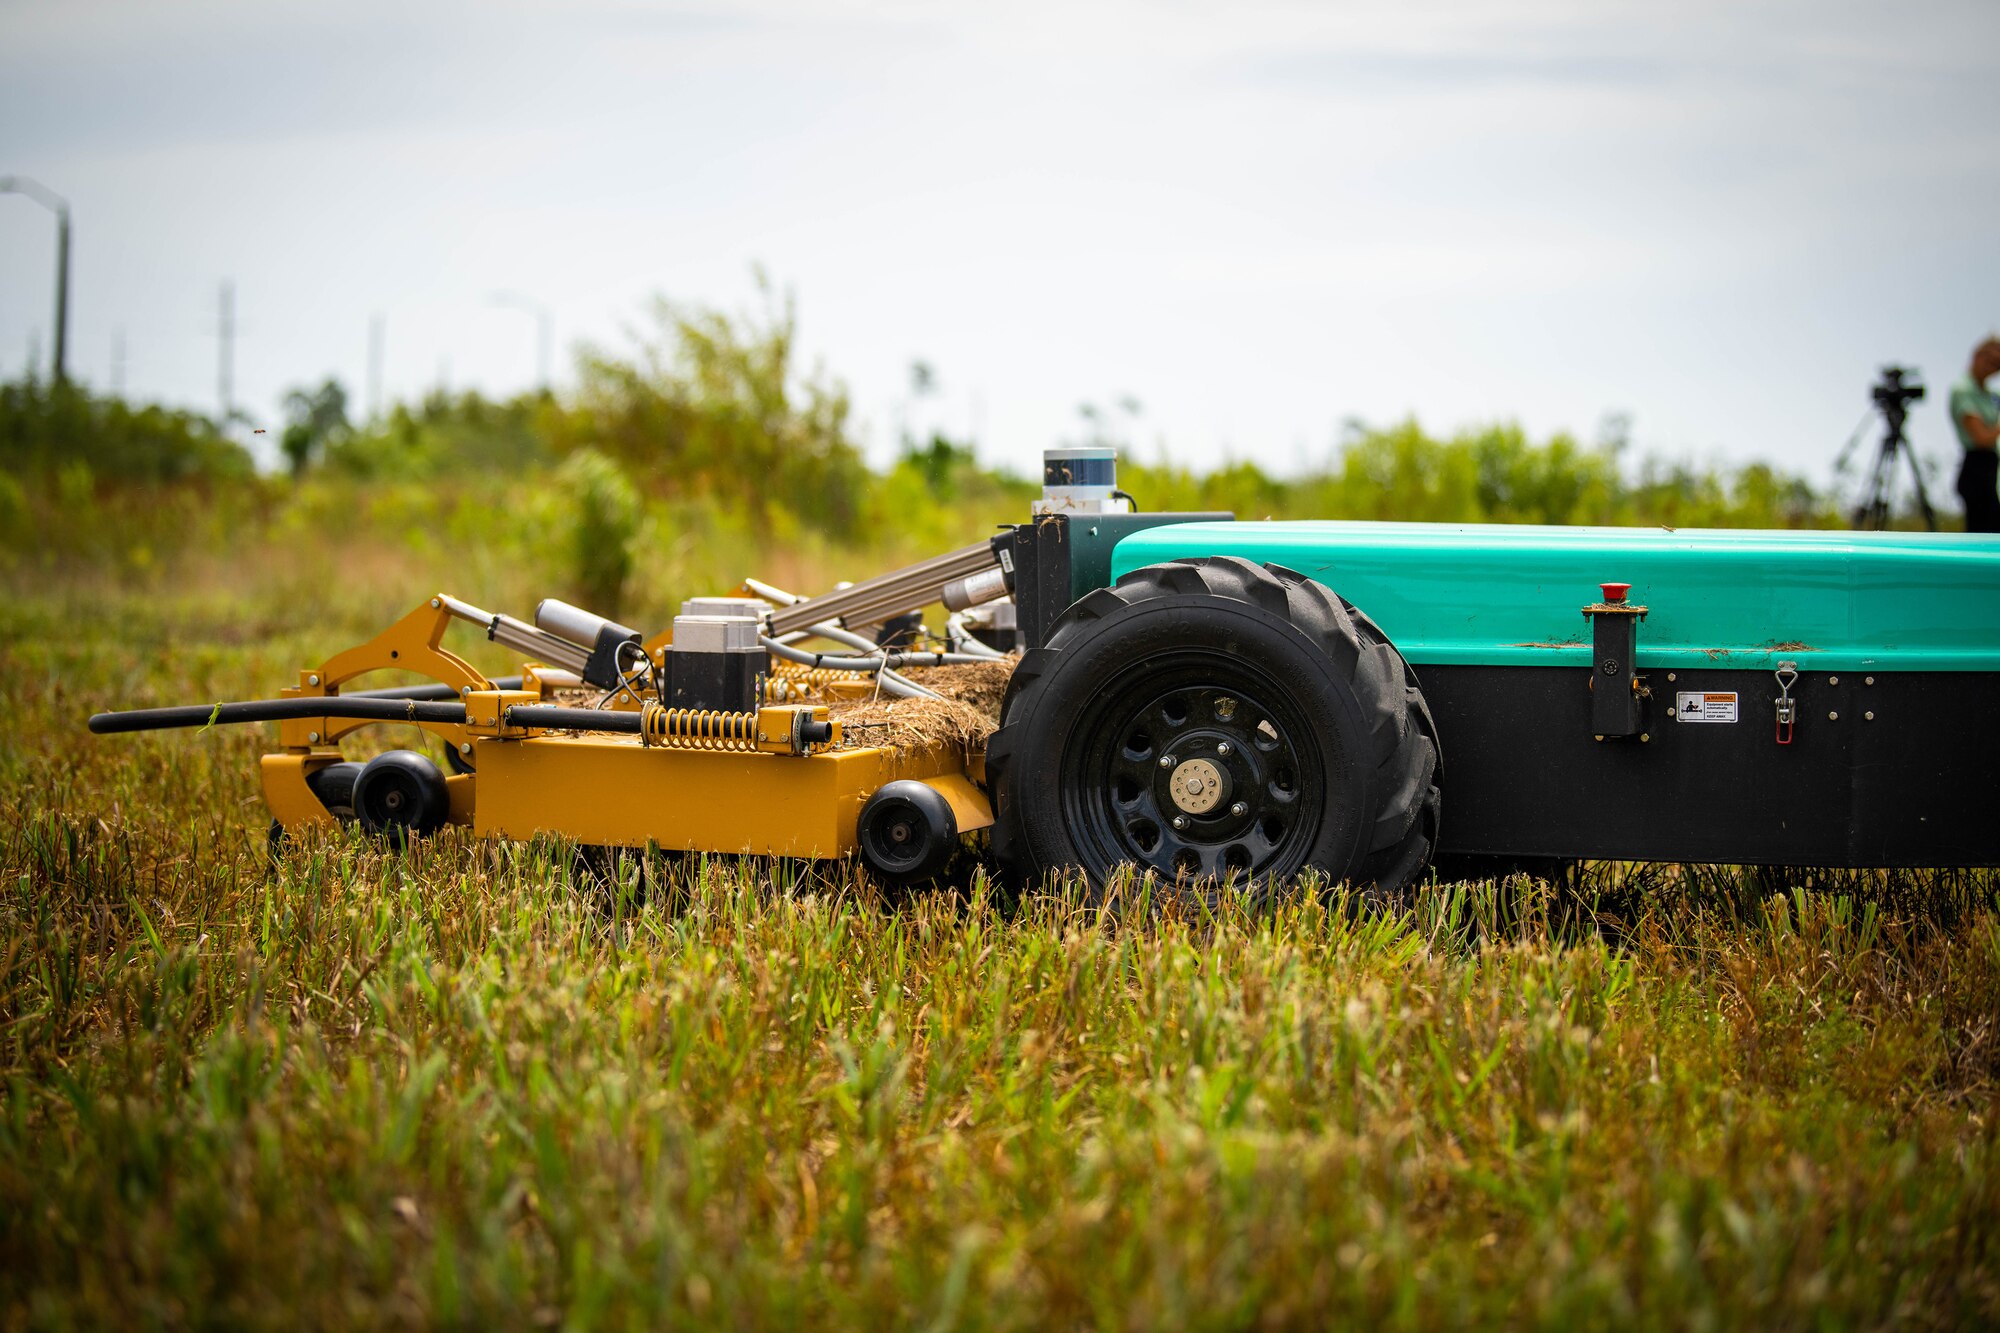 Un-manned lawn mower mows grass.